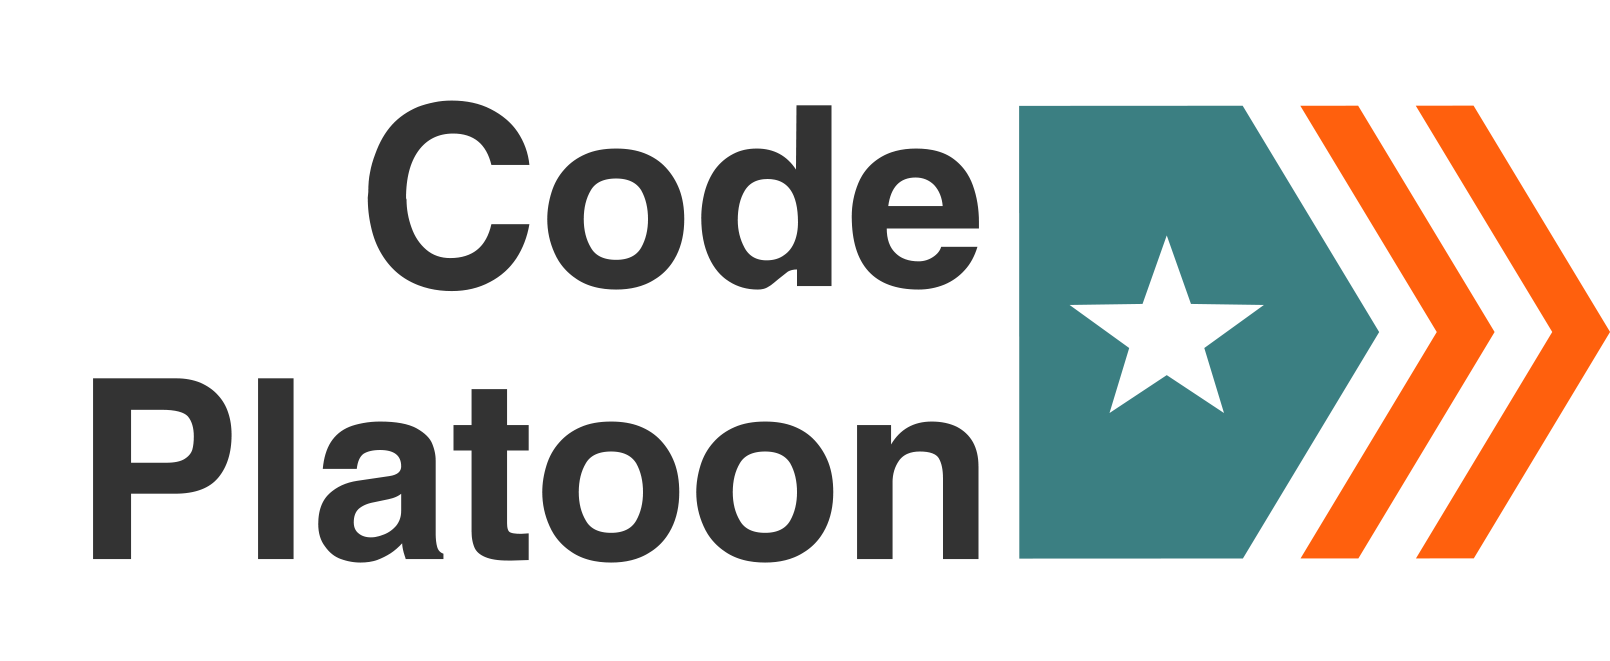 Logo for Code Platoon Bootcamp